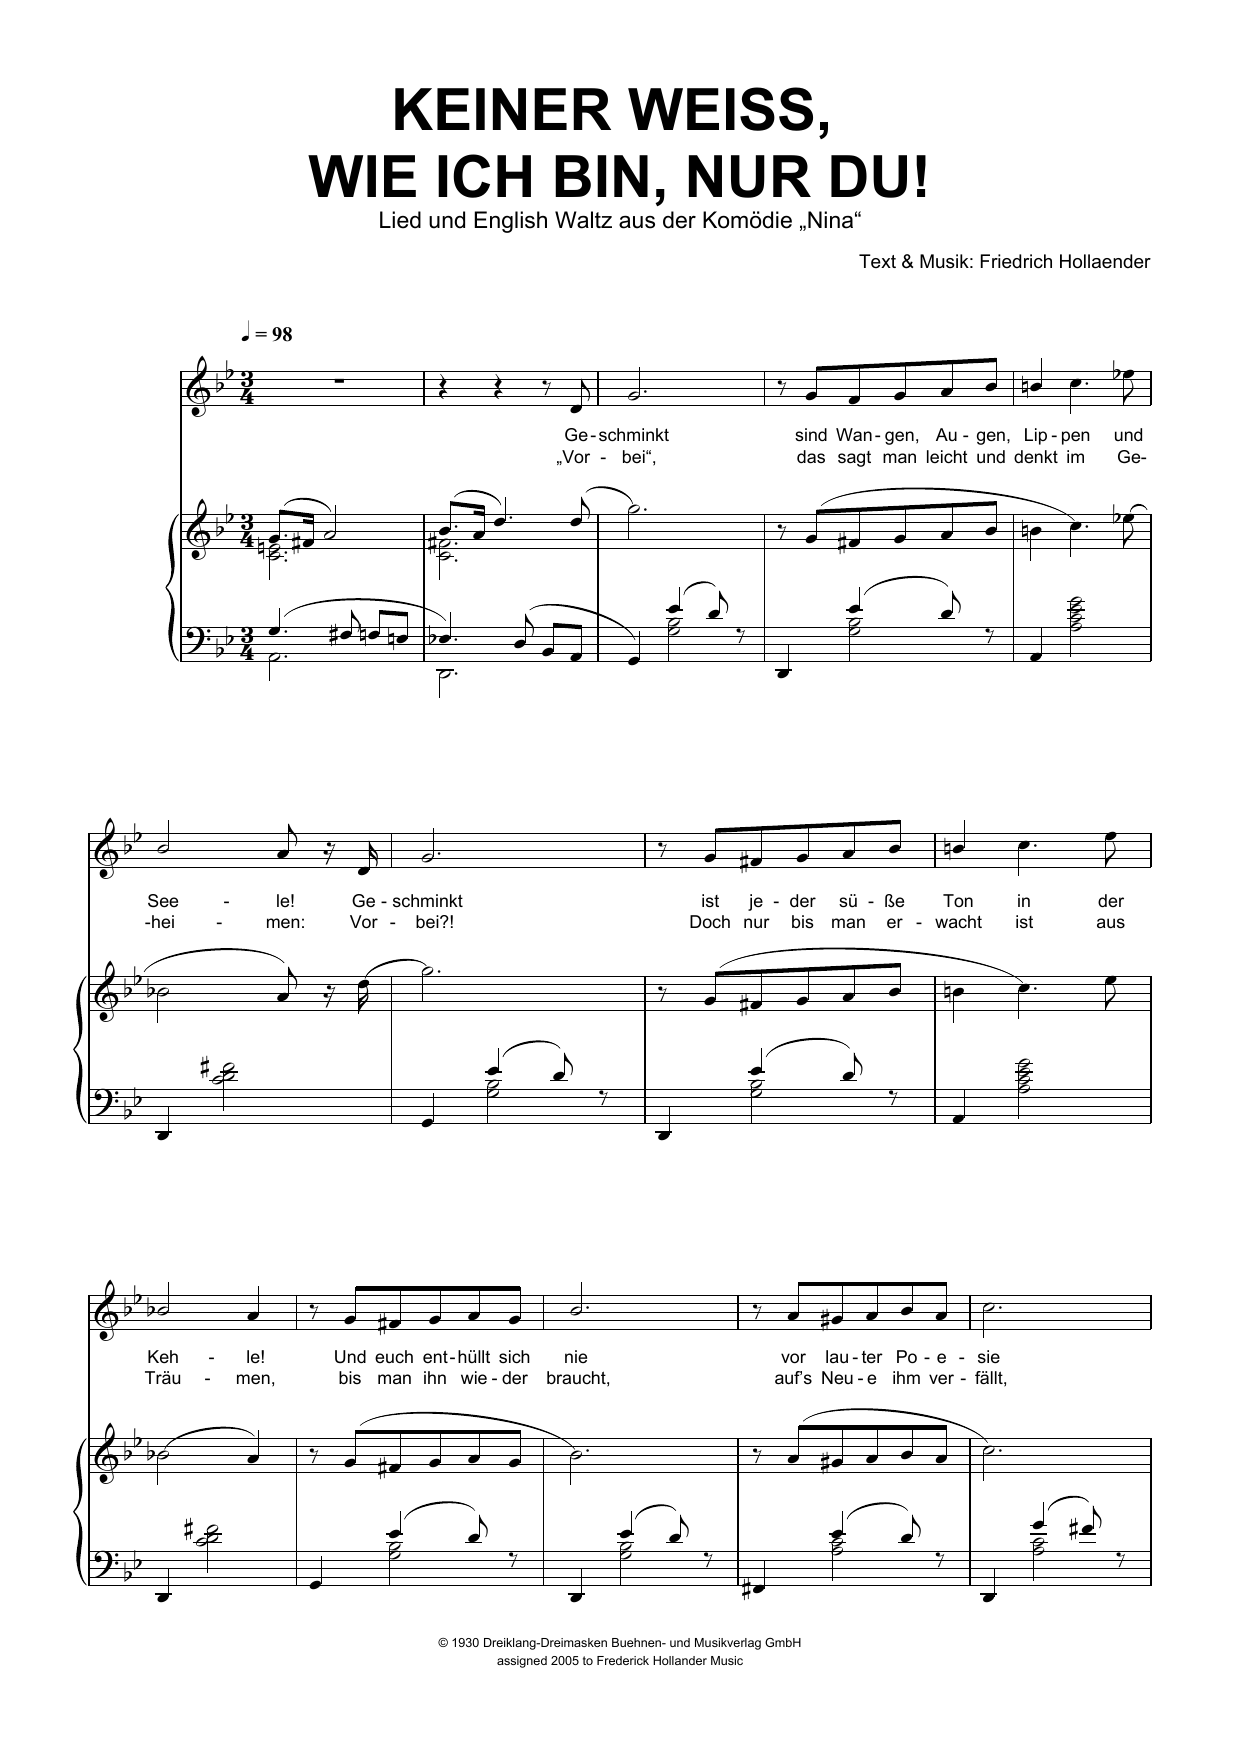 Download Friedrich Hollaender Keiner Weiss, Wie Ich Bin, Nur Du! Sheet Music and learn how to play Piano & Vocal PDF digital score in minutes